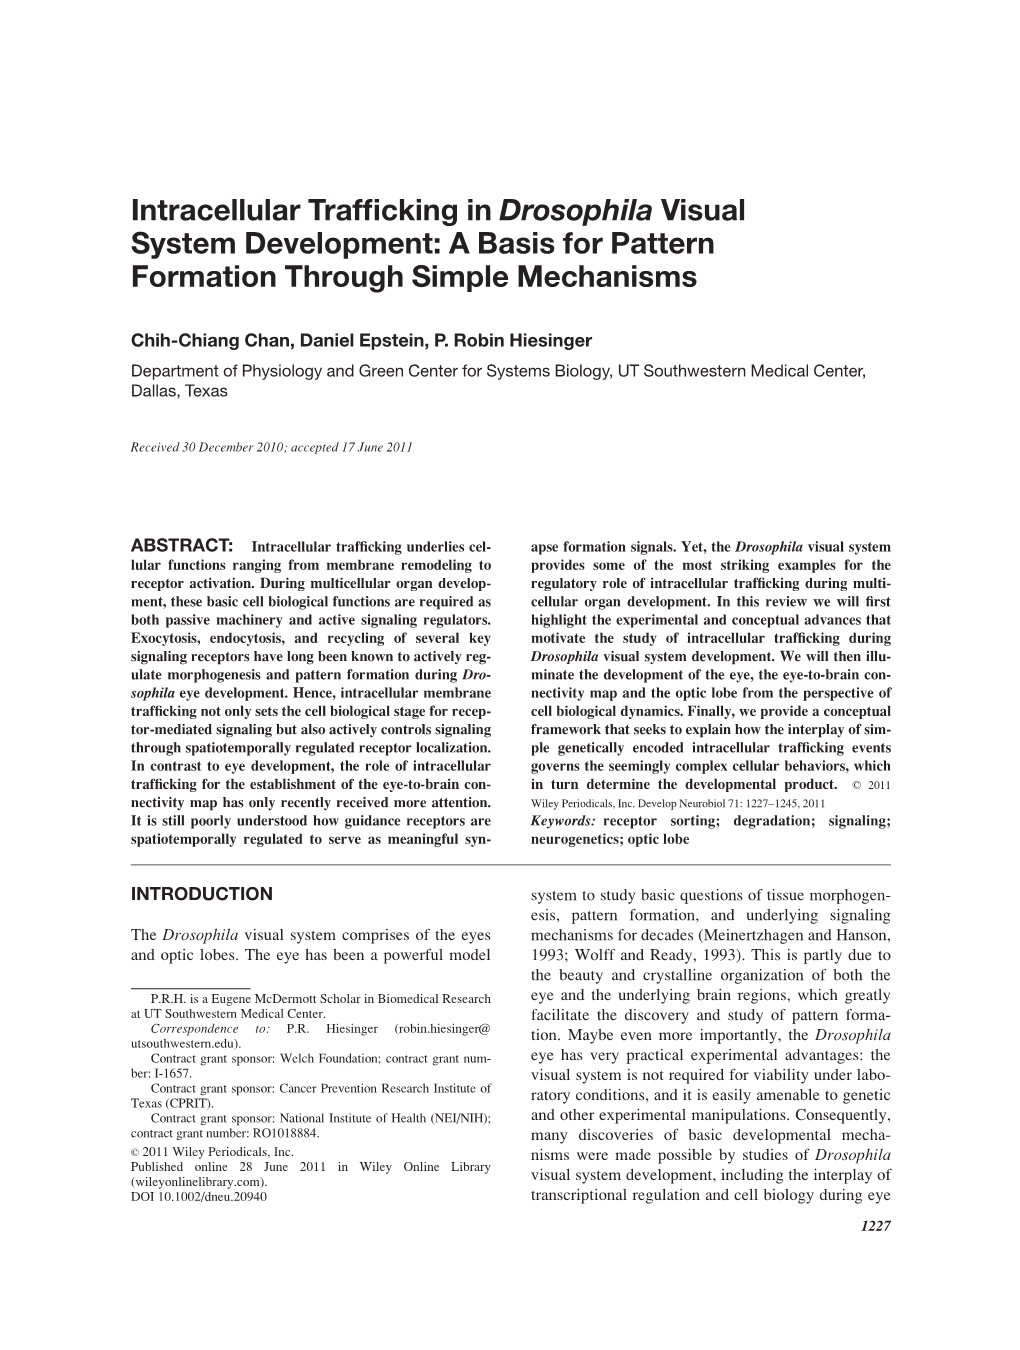 Intracellular Trafficking in Drosophila Visual System Development: a Basis